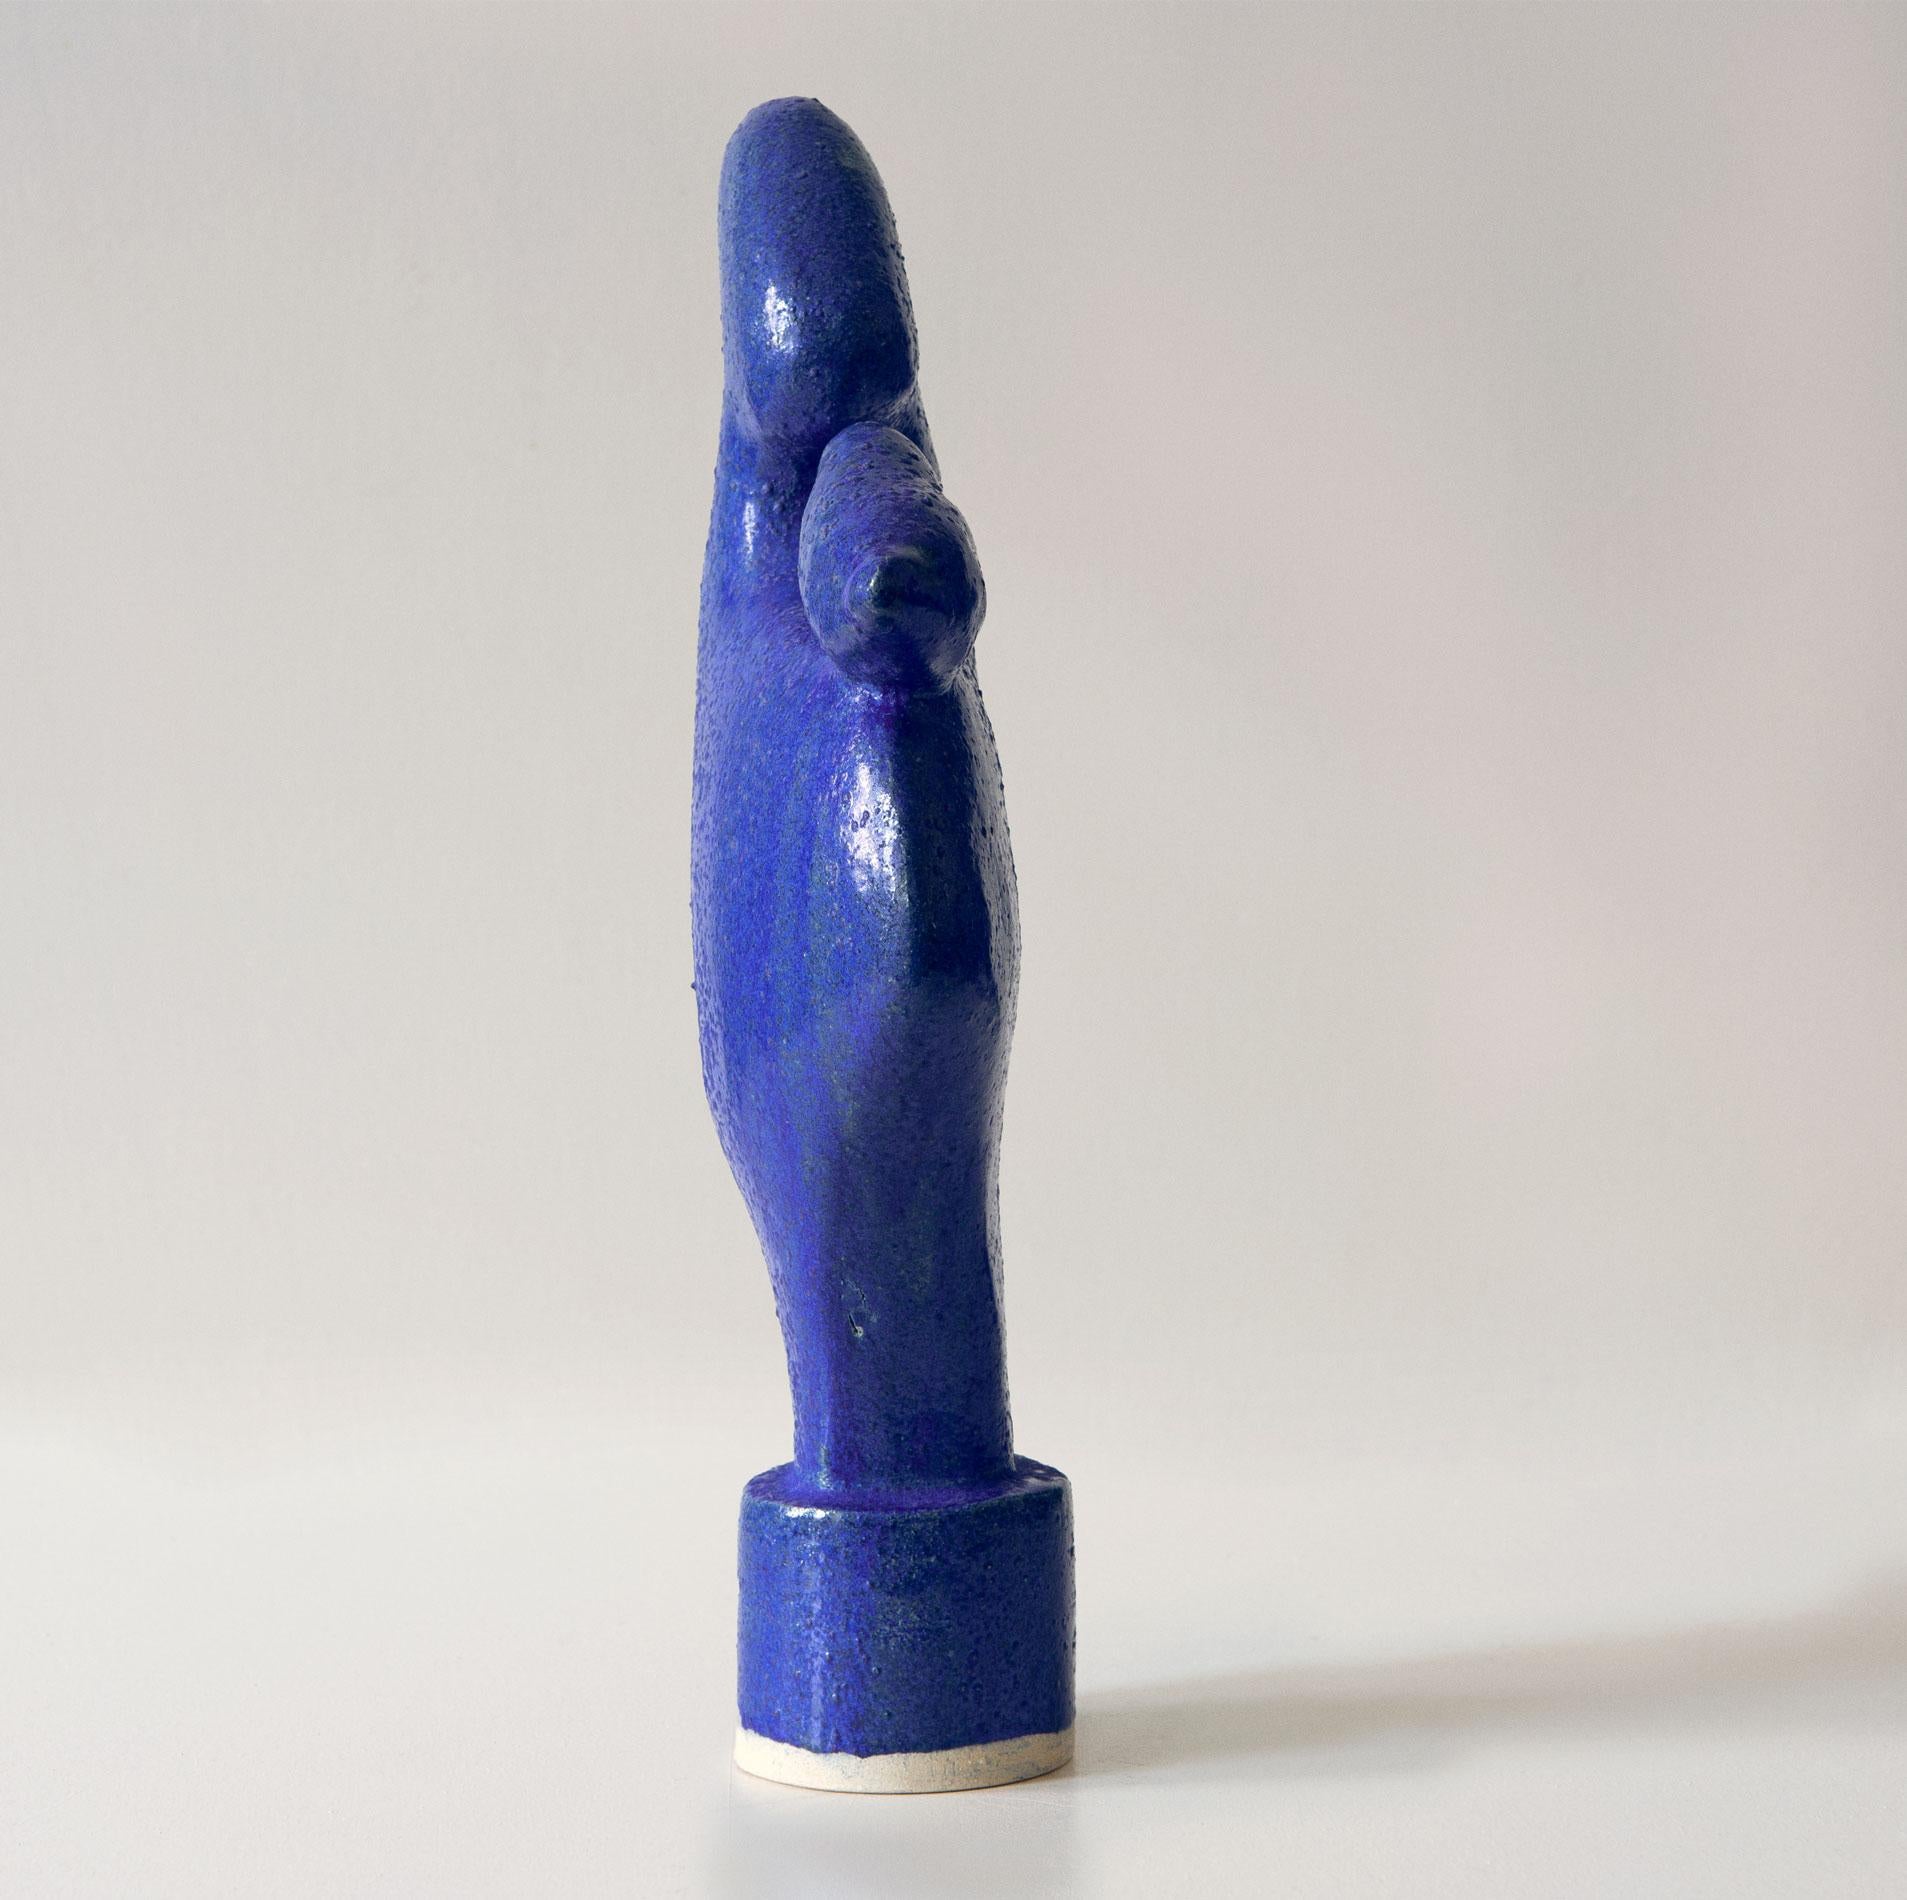 Dogu Lady 61 - Modern Minimal Abstract Blue Ceramic Sculpture - Gray Abstract Sculpture by Noe Kuremoto